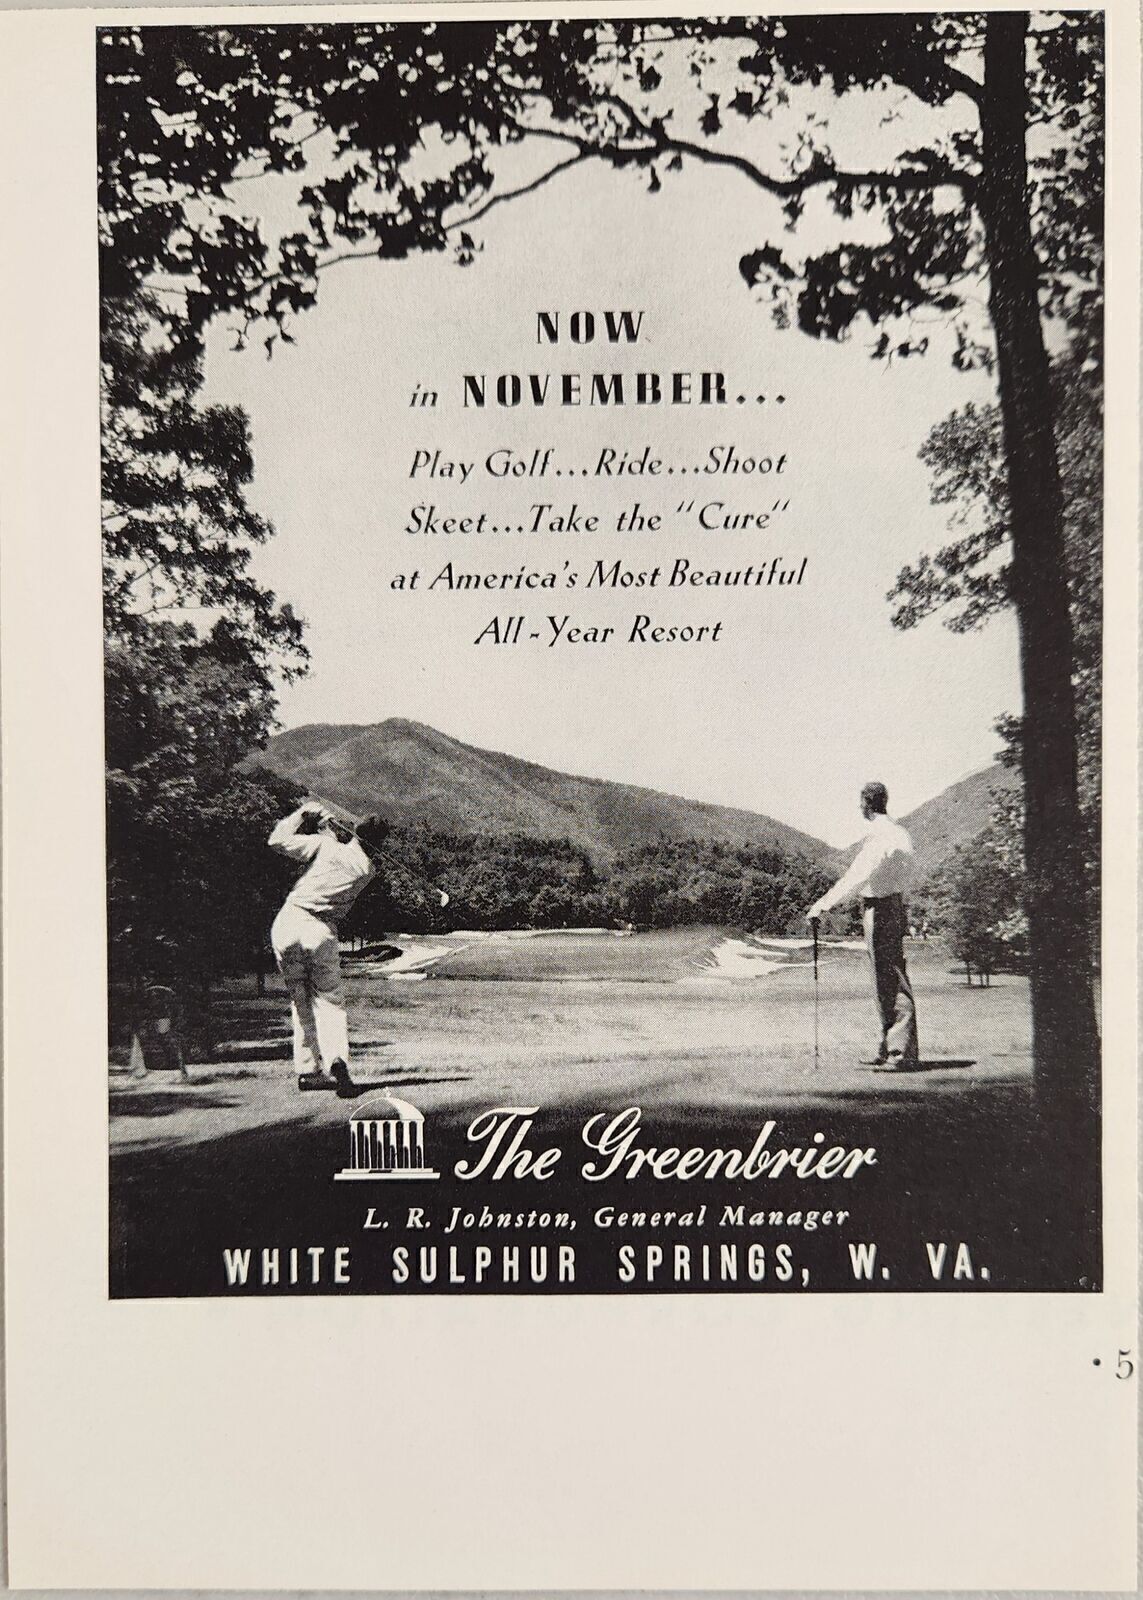 1936 Print Ad The Greenbrier Resort Hotel, Golf Course White Sulphur Springs,WV